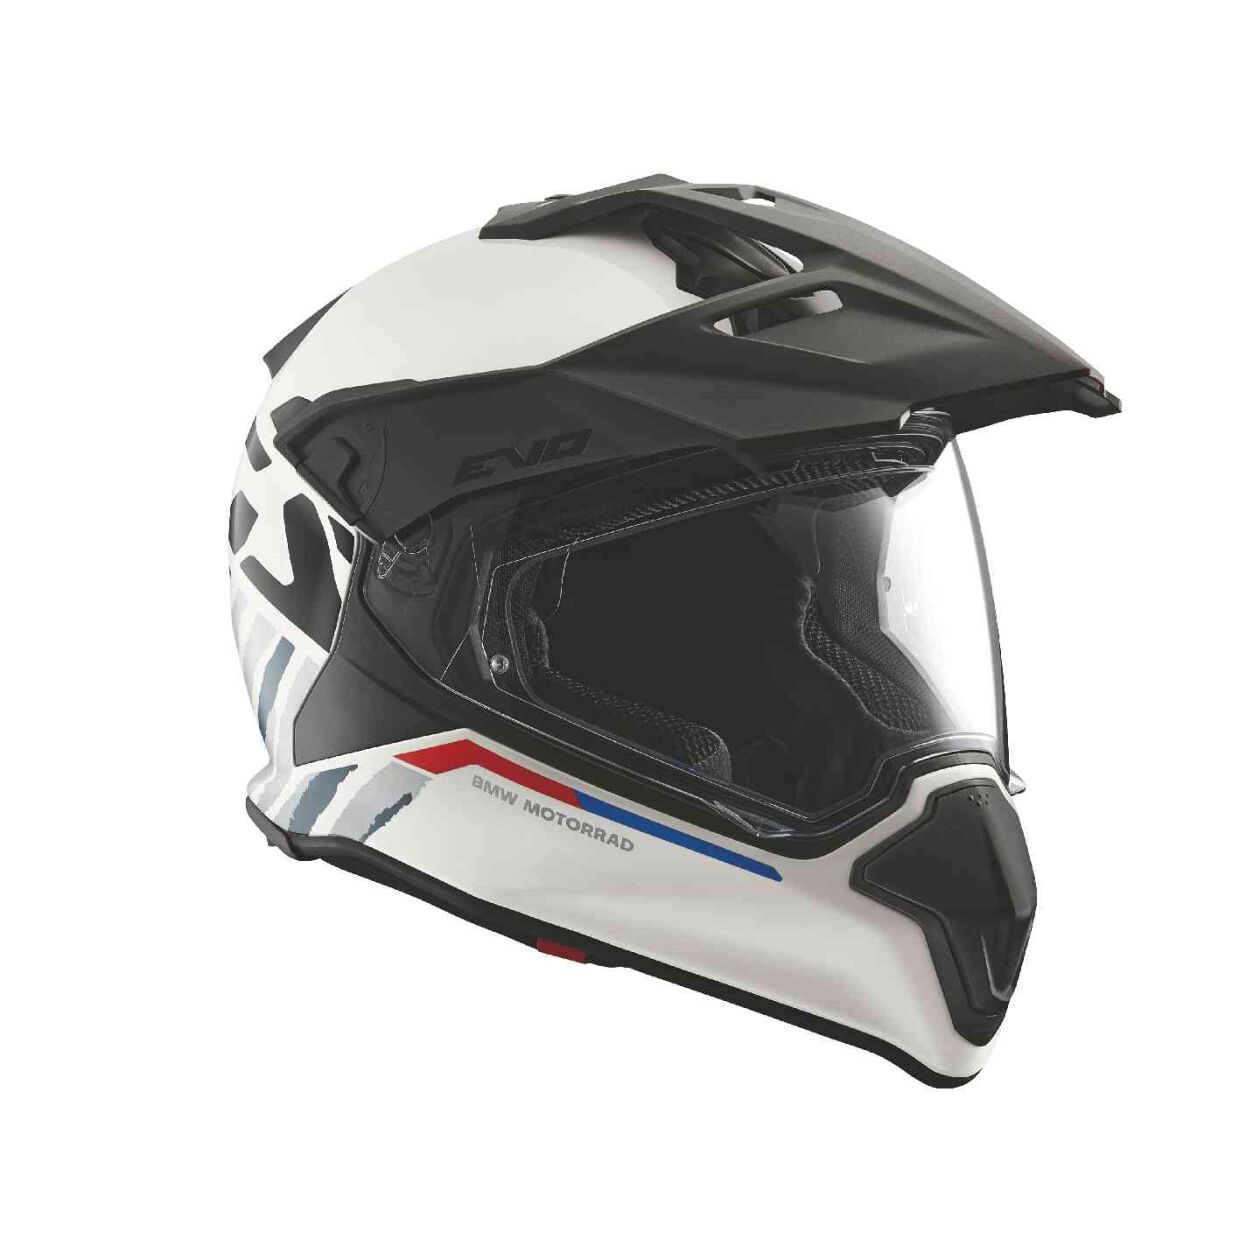 BMW GS Carbon Evo helmet